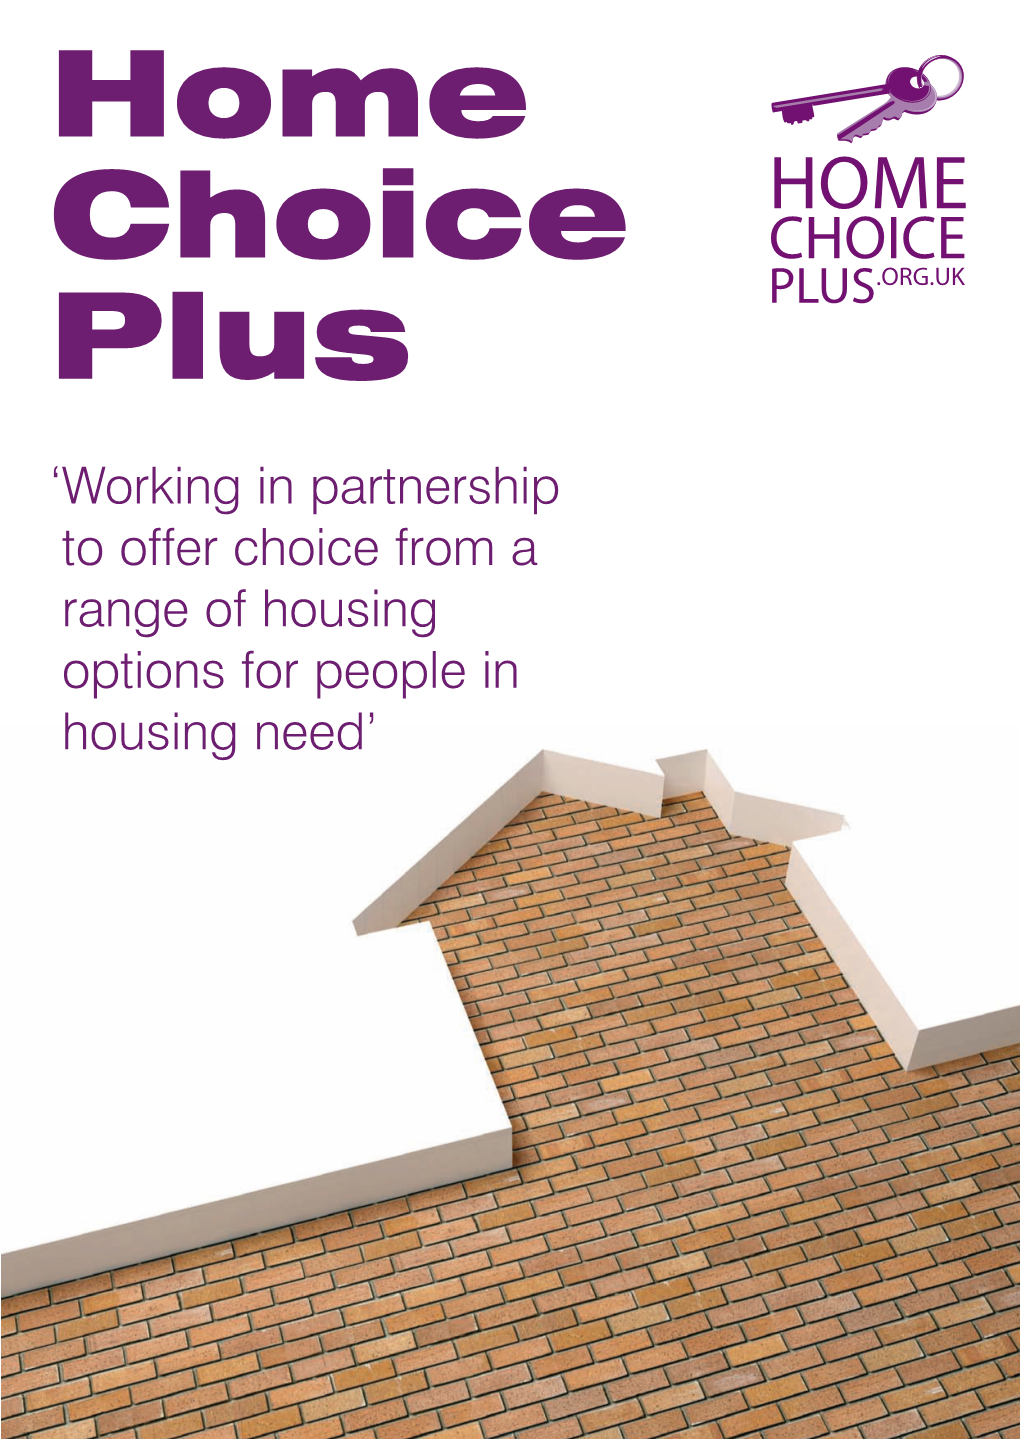 Choice Plus:Layout 1 5/1/10 10:26 Page 3 Home HOME Choice CHOICE .ORG.UK Plus PLUS